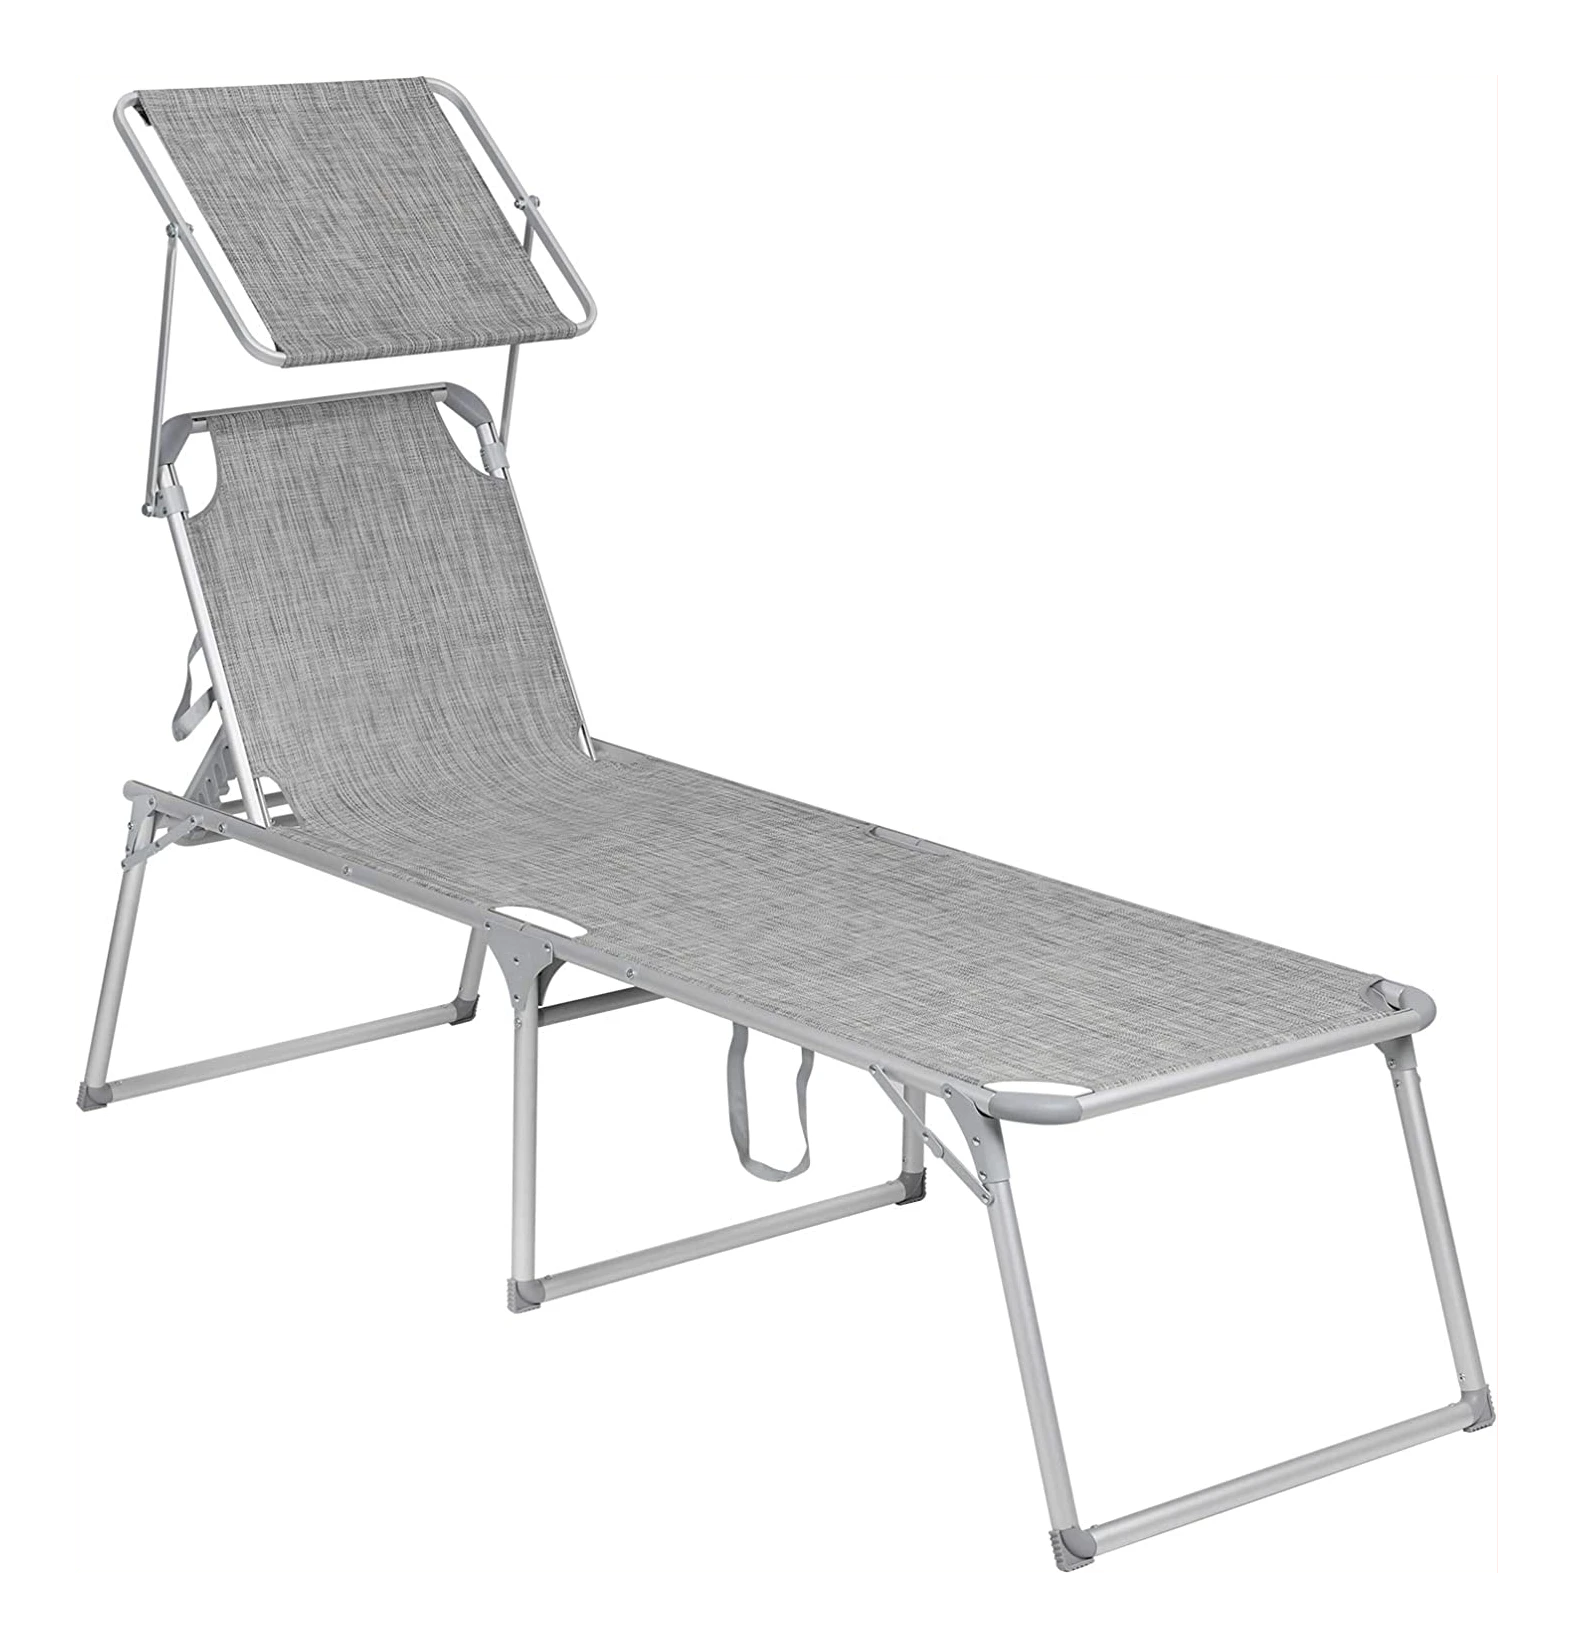 dienblad Seraph Verdraaiing Grote zonneligstoel, inklapbaar, 65 x 200 x 48 cm, max. belastbaarheid 150  kg, met parasol en rugleuning, voor tuin, terras, balkon, grijs melange -  SimpleDeal.nl